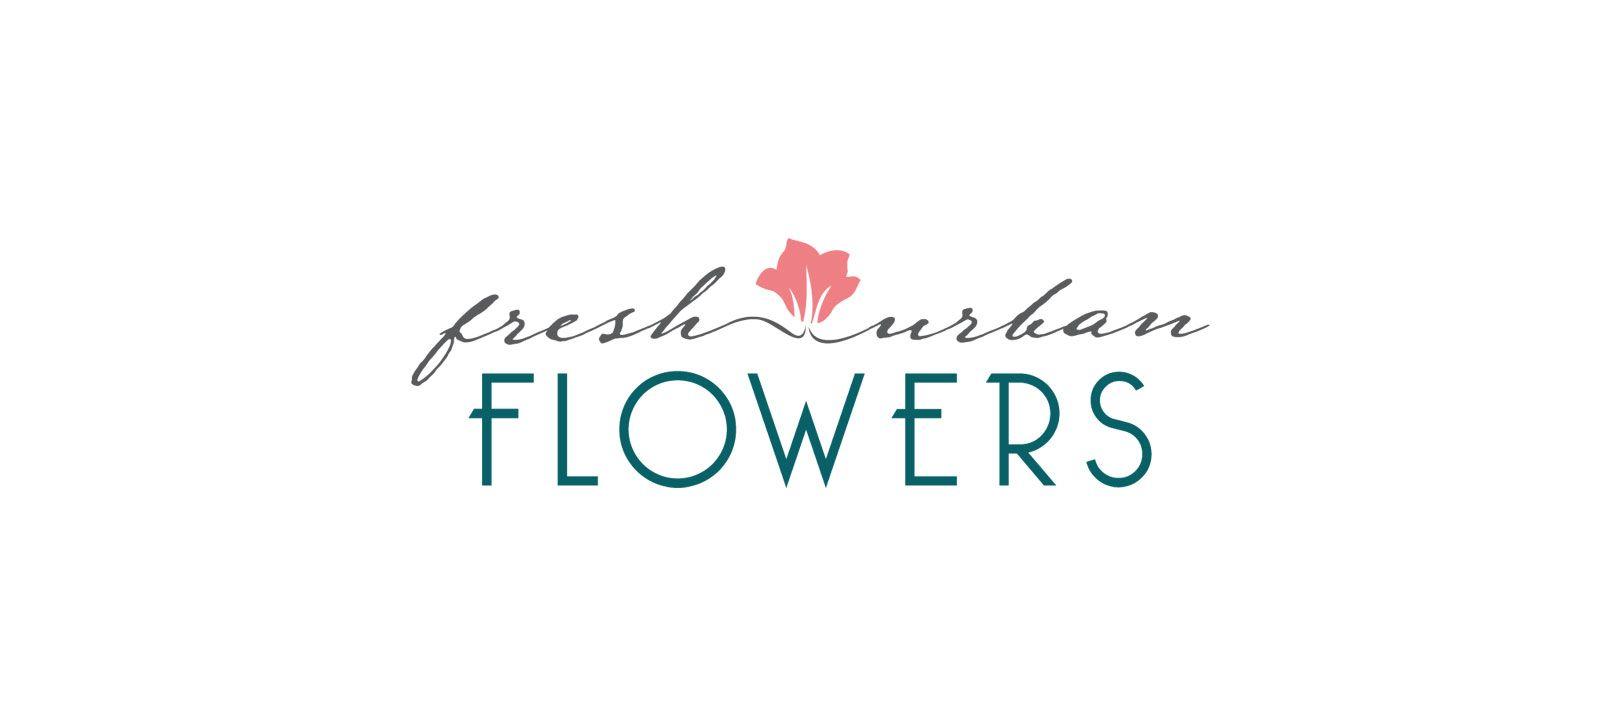 Fresh Flower Logo - Fresh Urban Flowers